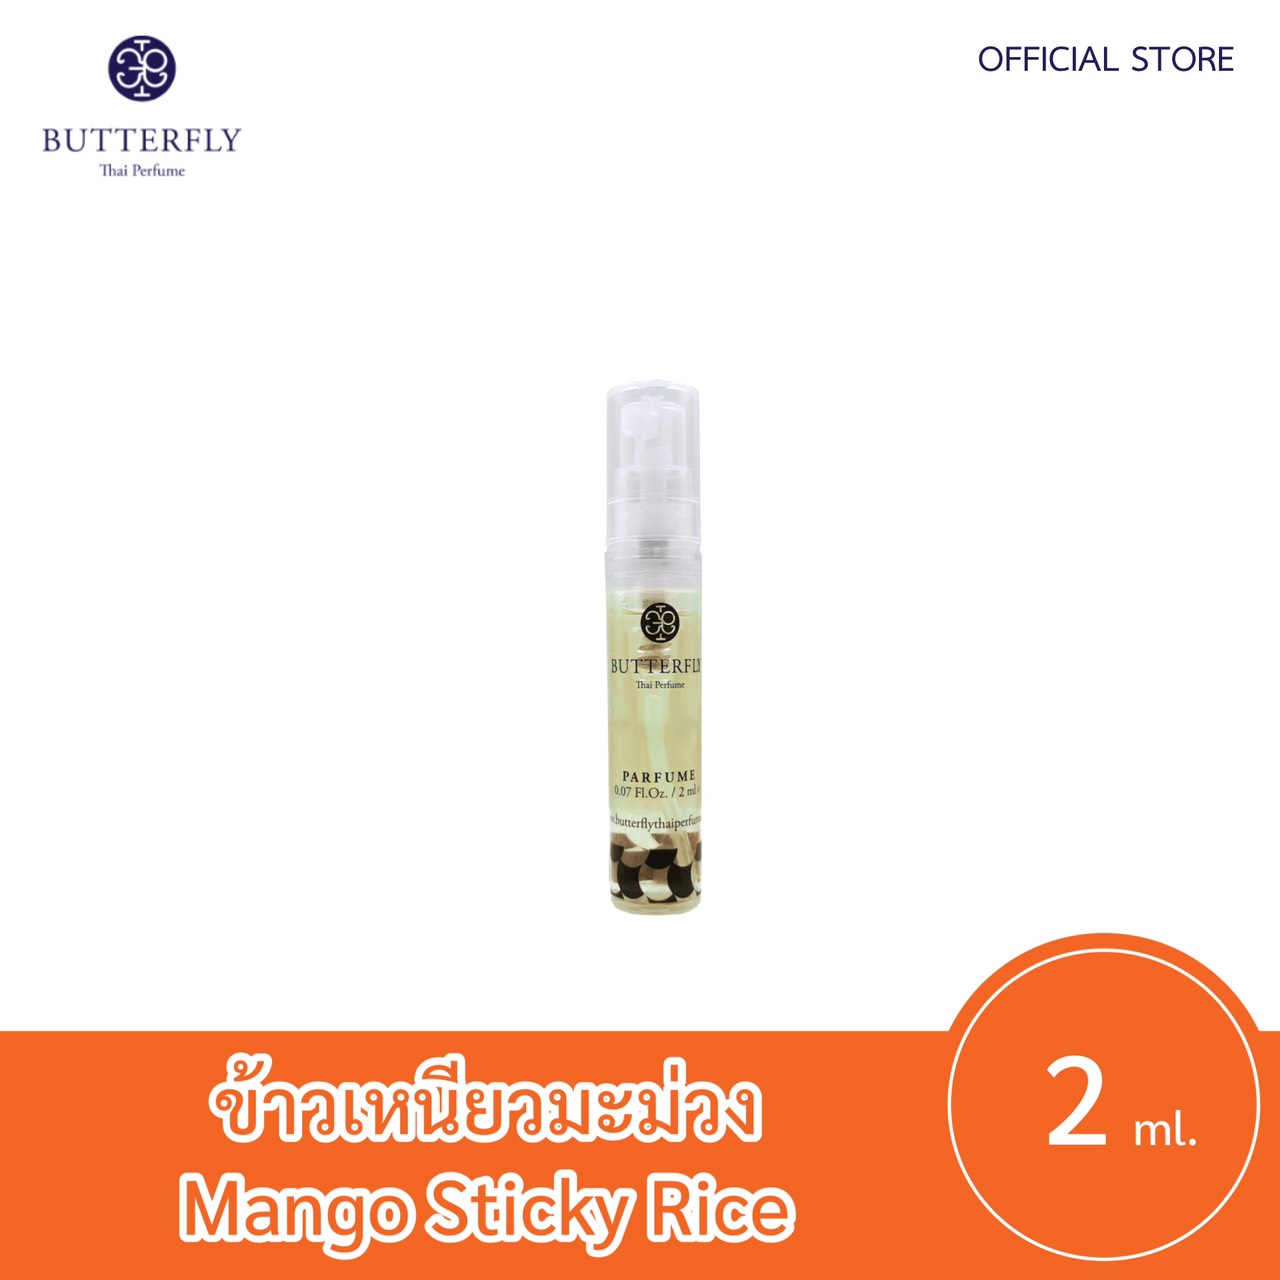 Butterfly Thai Perfume - น้ำหอมบัตเตอร์ฟลาย ไทย เพอร์ฟูม  ขนาดทดลอง 2ml.  กลิ่น ข้าวเหนียวมะม่วงปริมาณ (มล.) 2